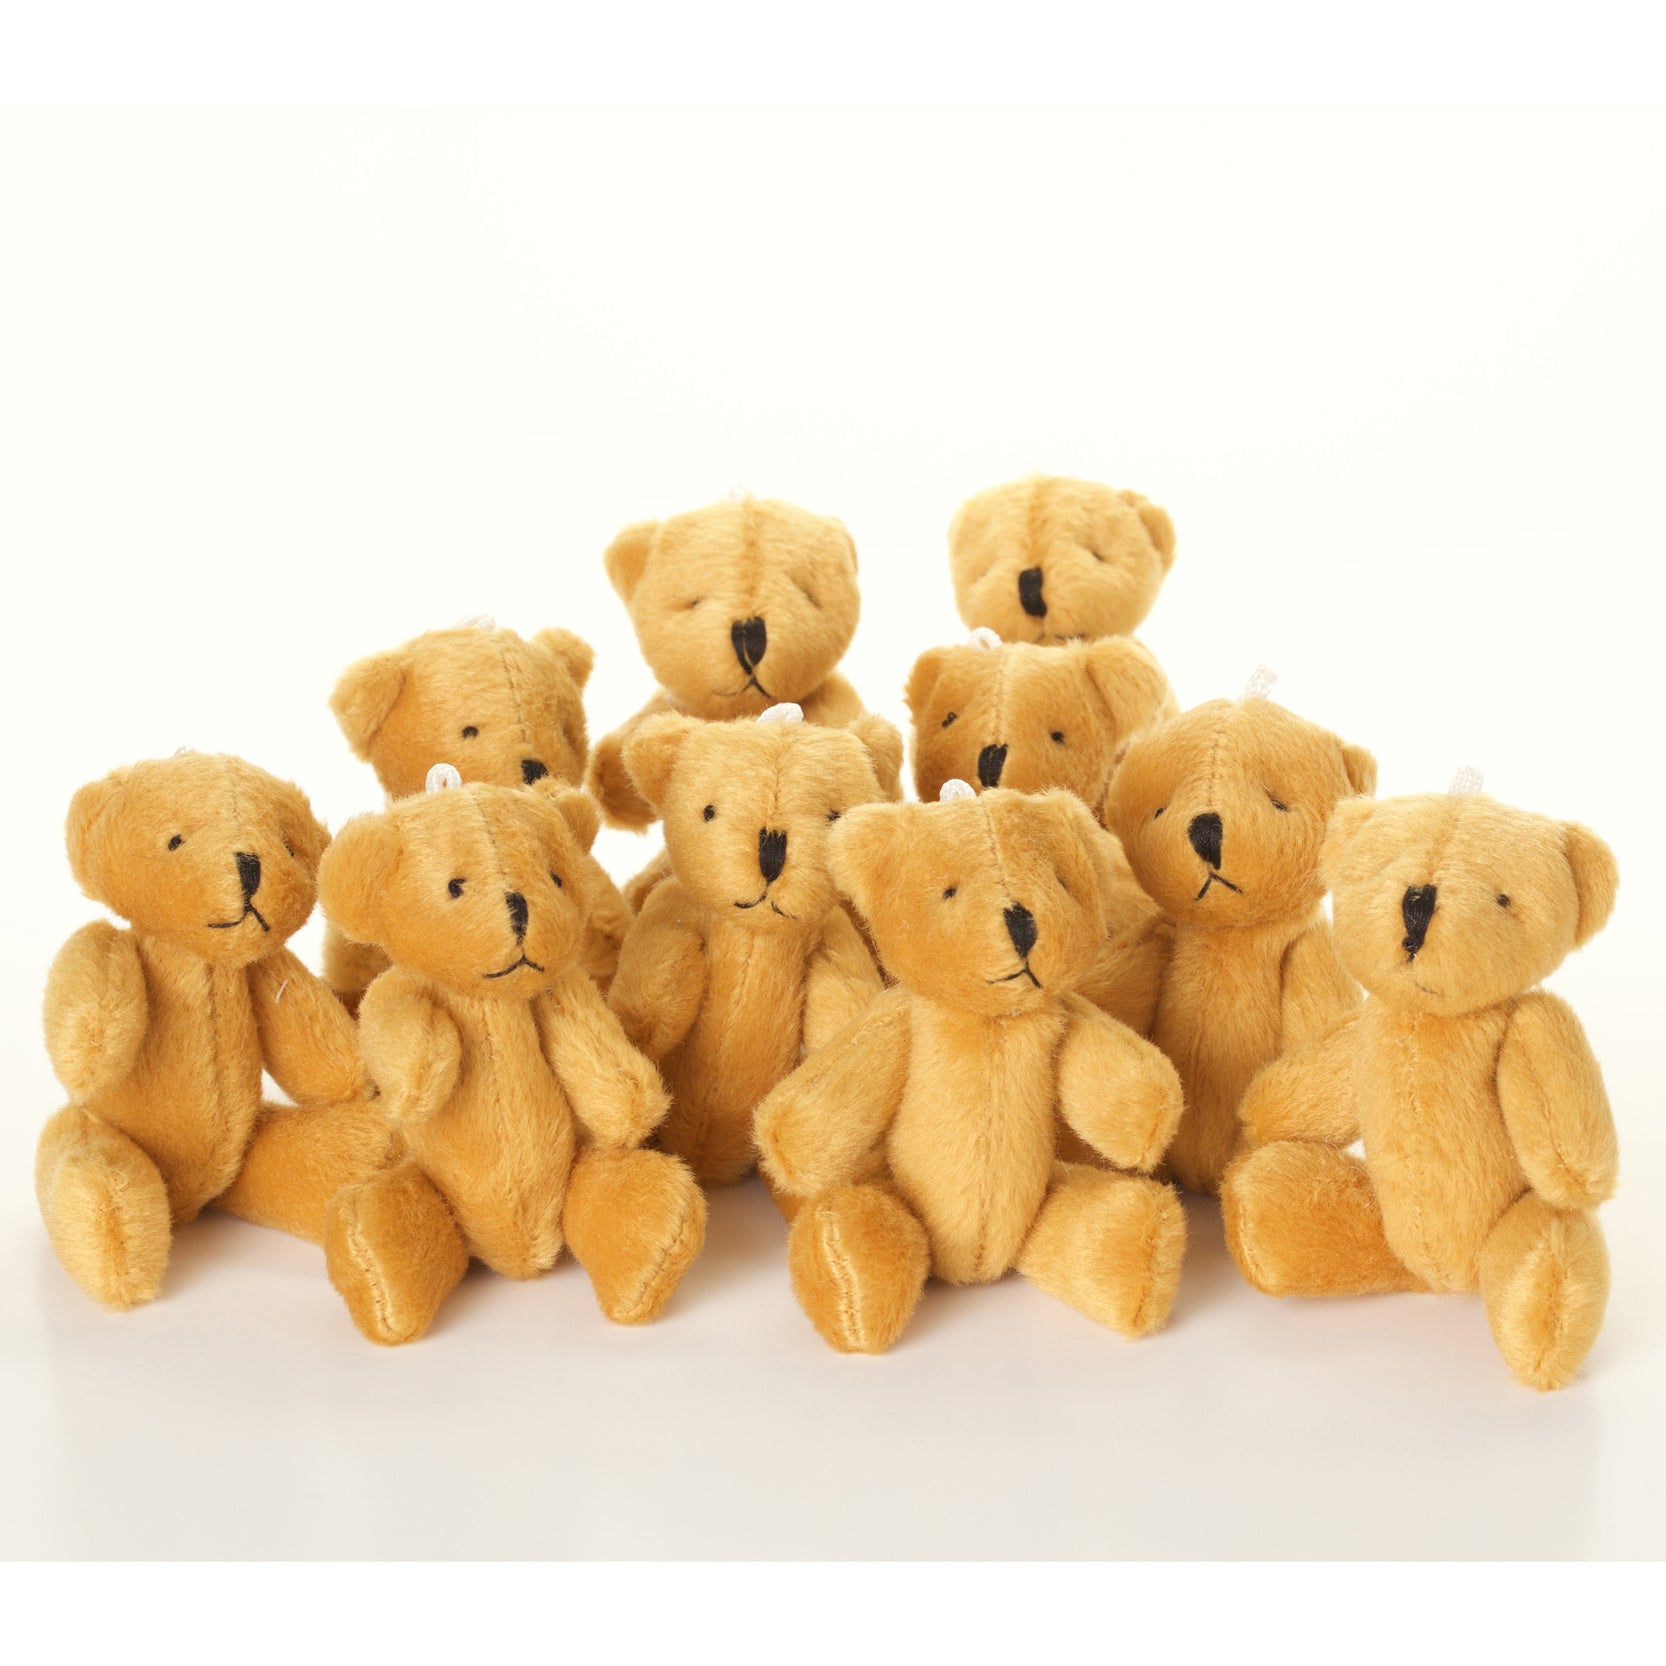 Small BROWN Teddy Bears X 75 - Cute Soft Adorable